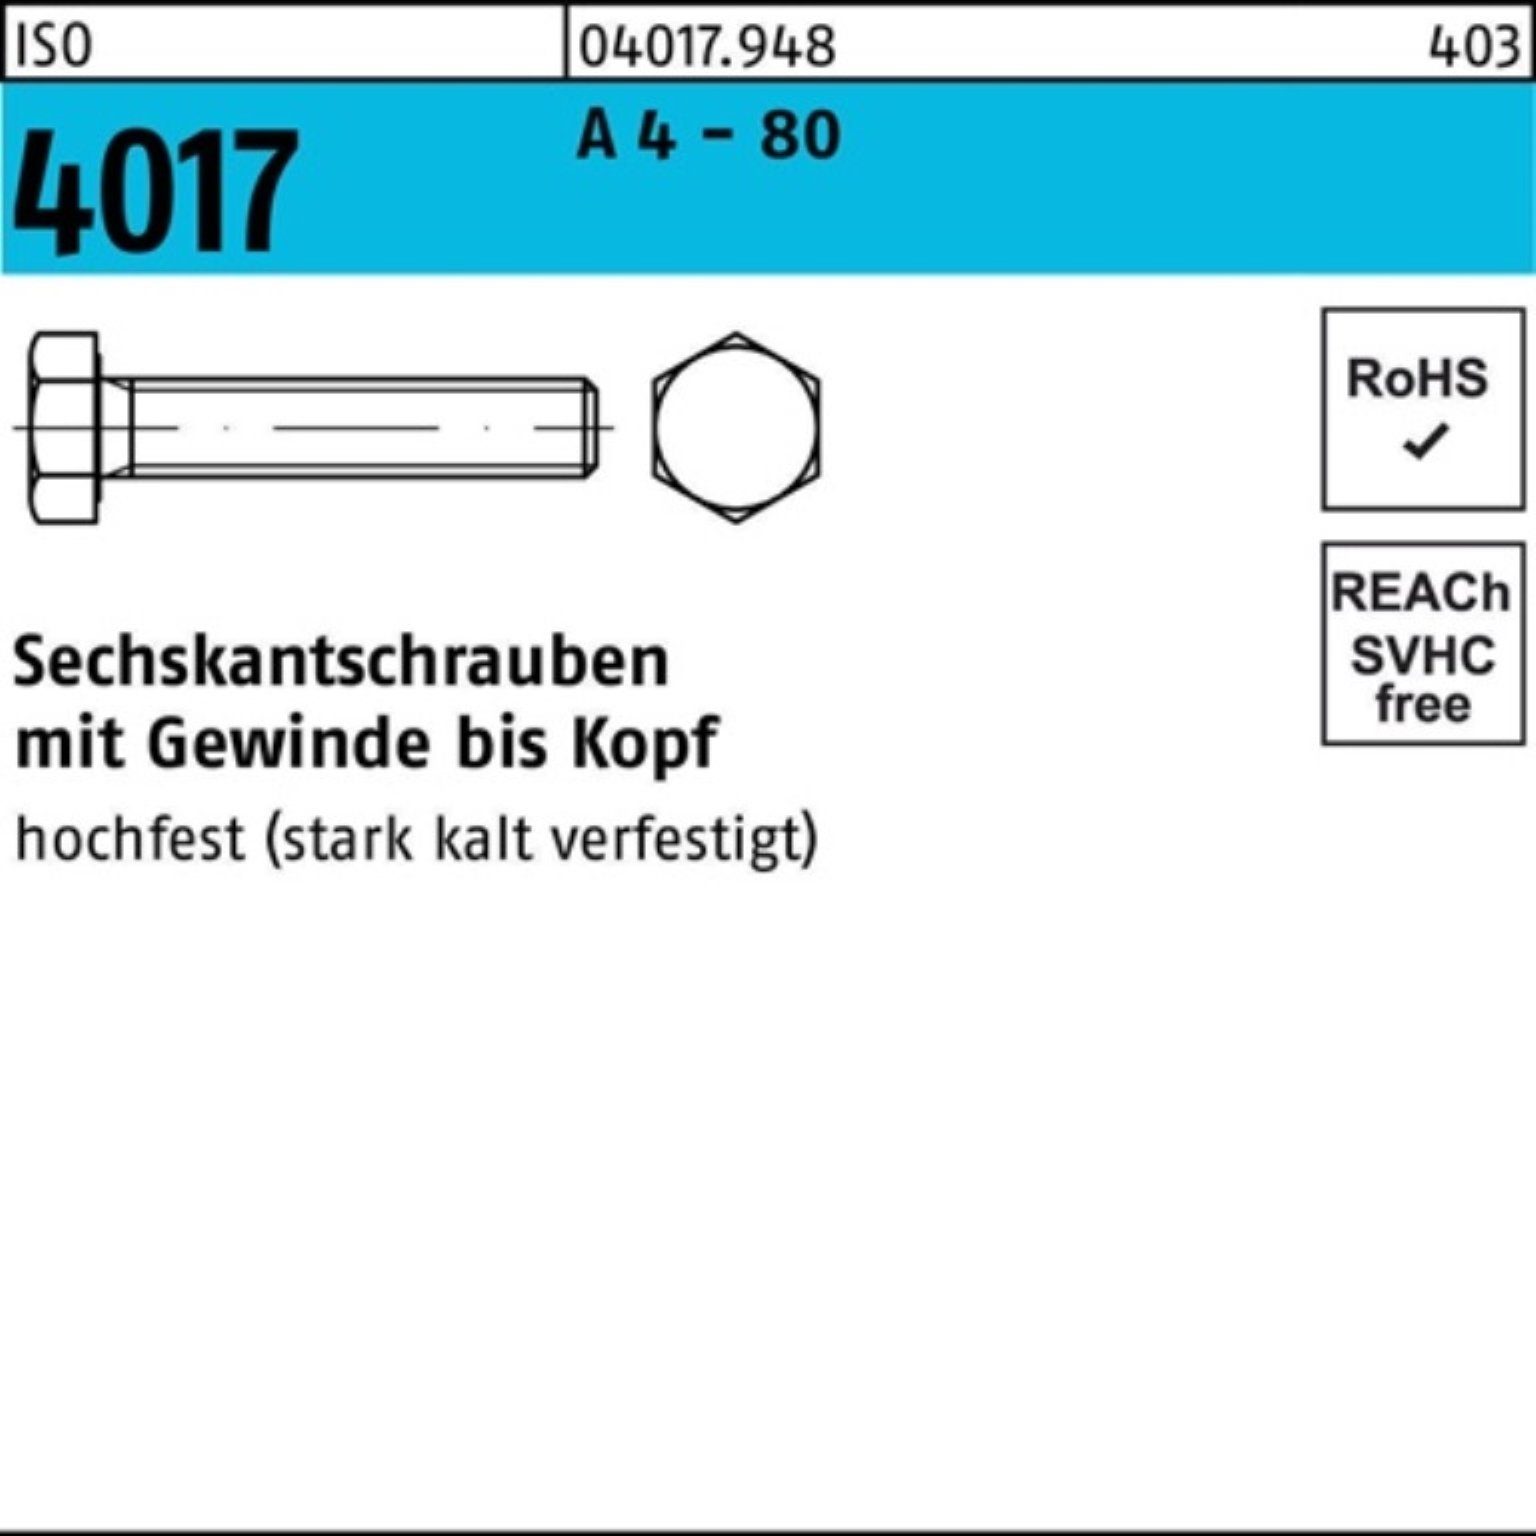 Vielfältig Bufab Sechskantschraube 100er Pack Sechskantschraube M8x 40 A VG Stück 80 - 4017 100 4 ISO IS